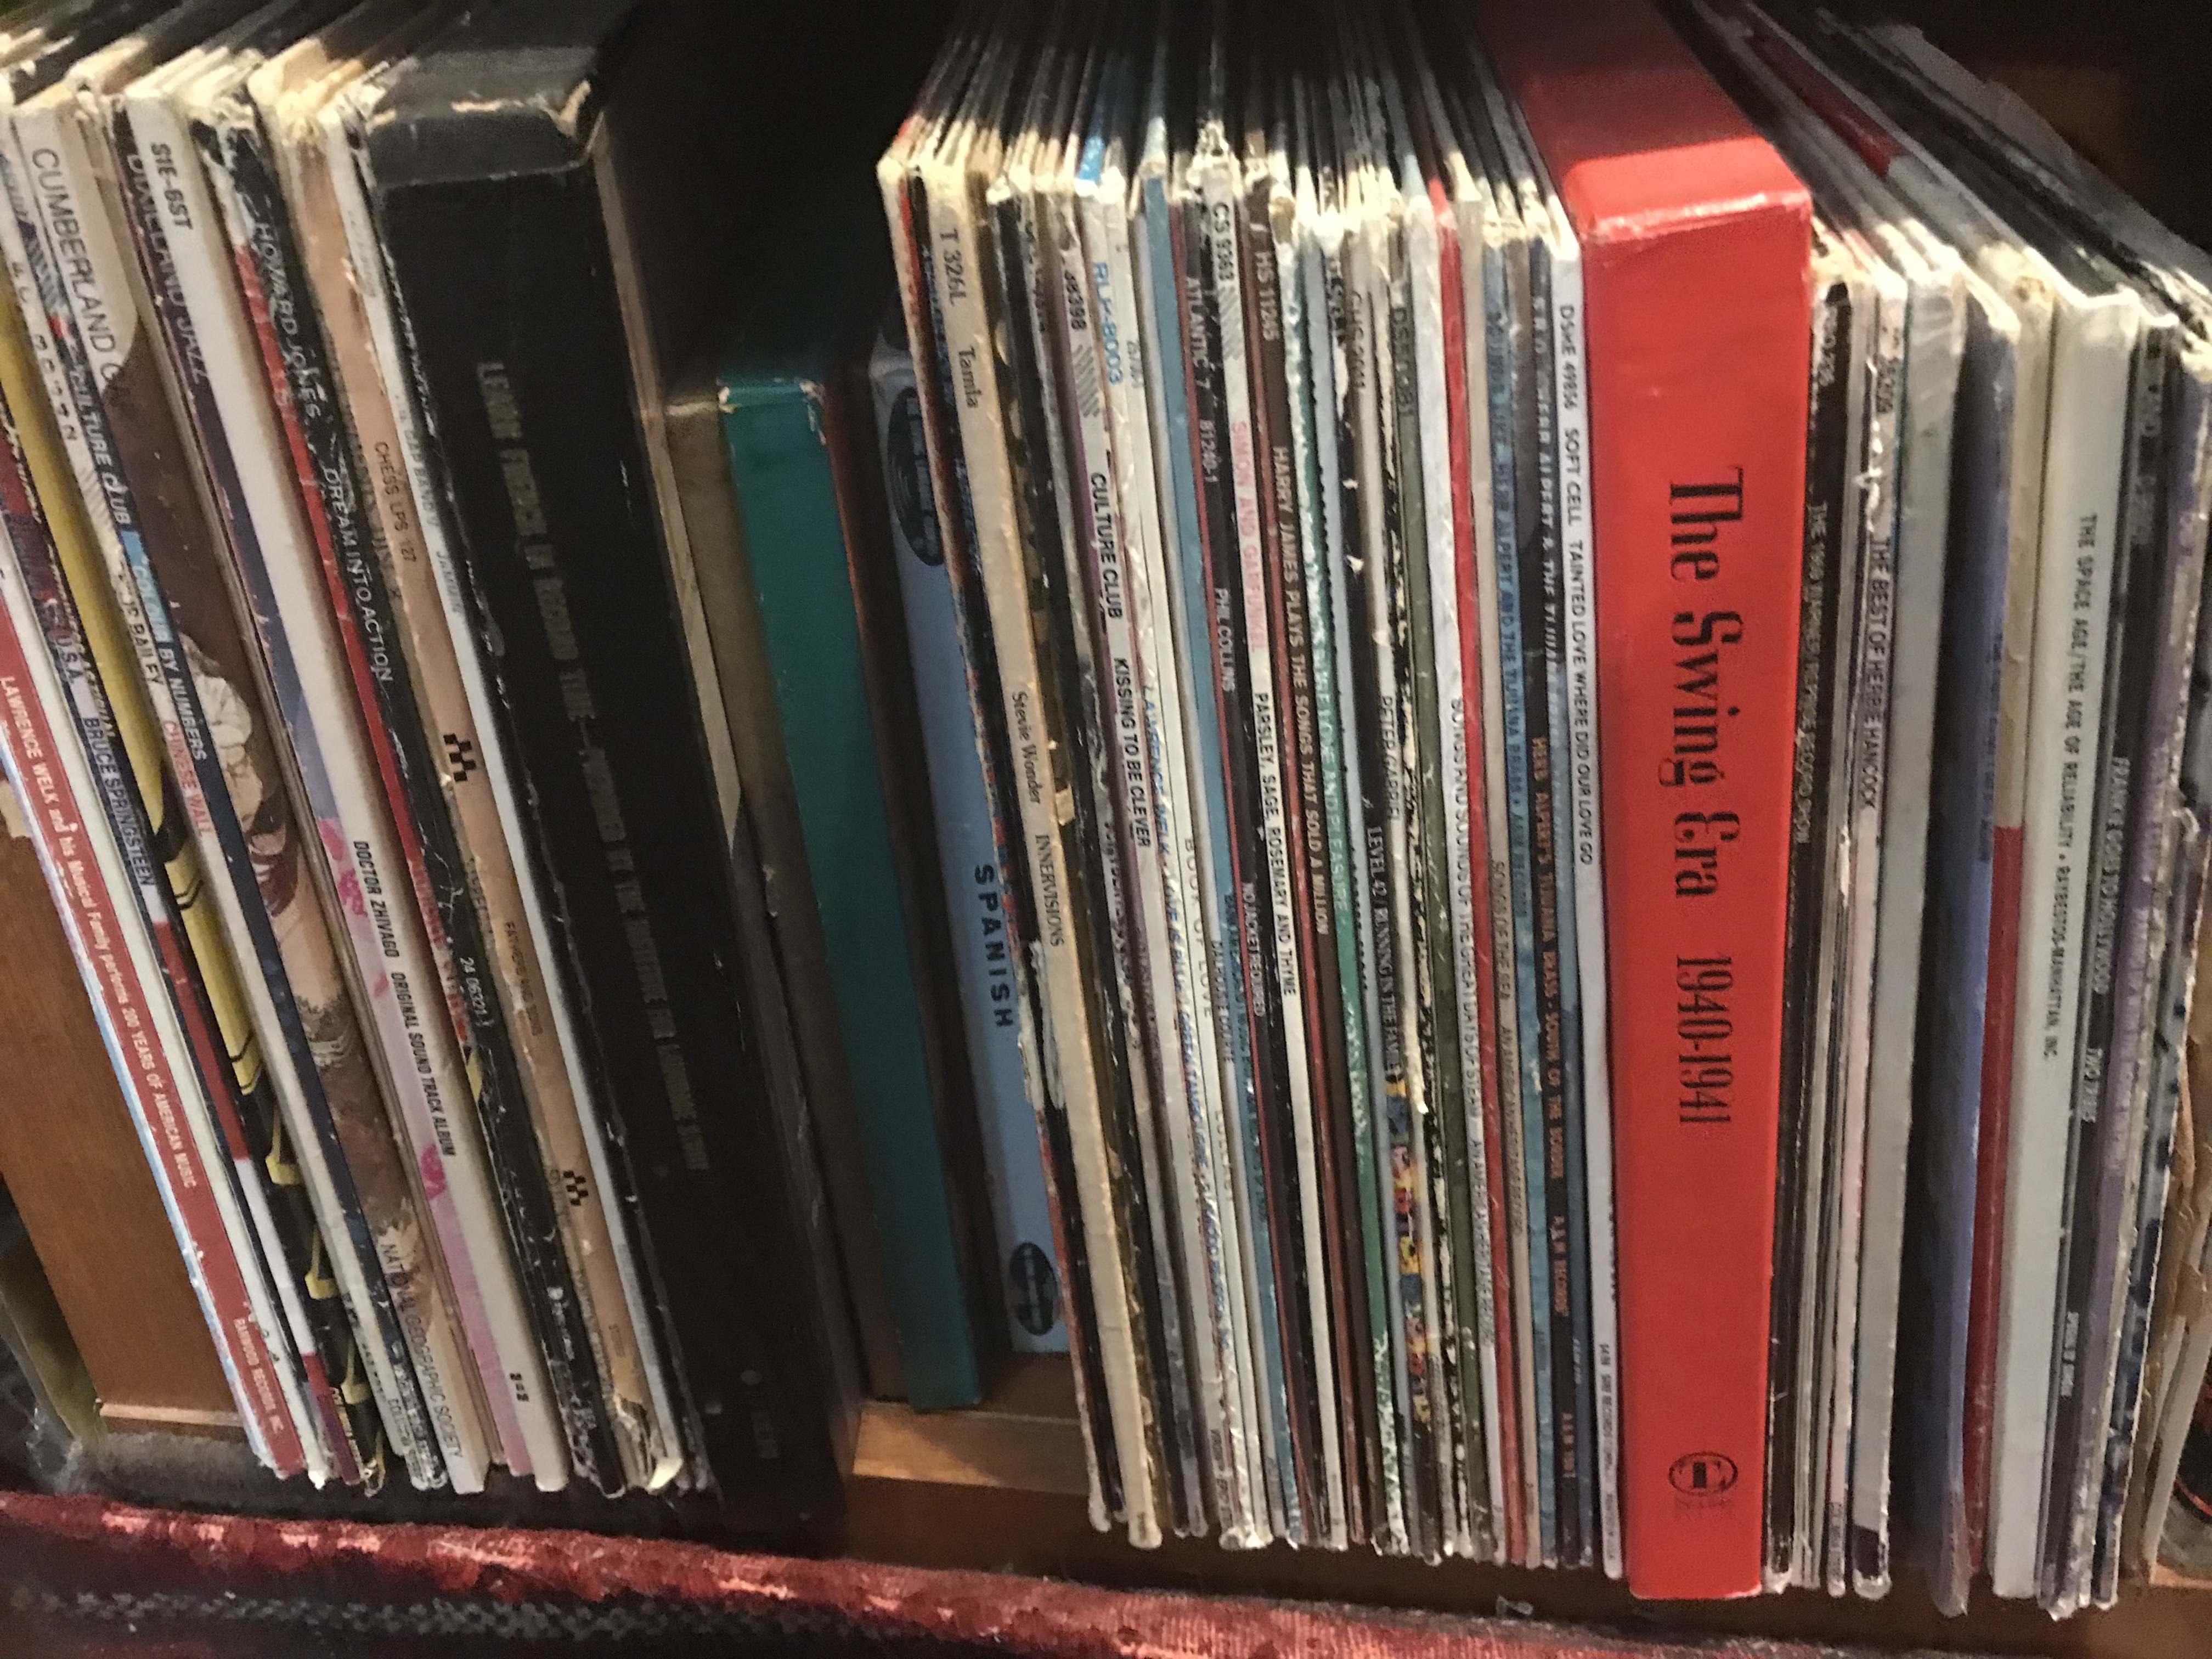 Vinyls For The Masses